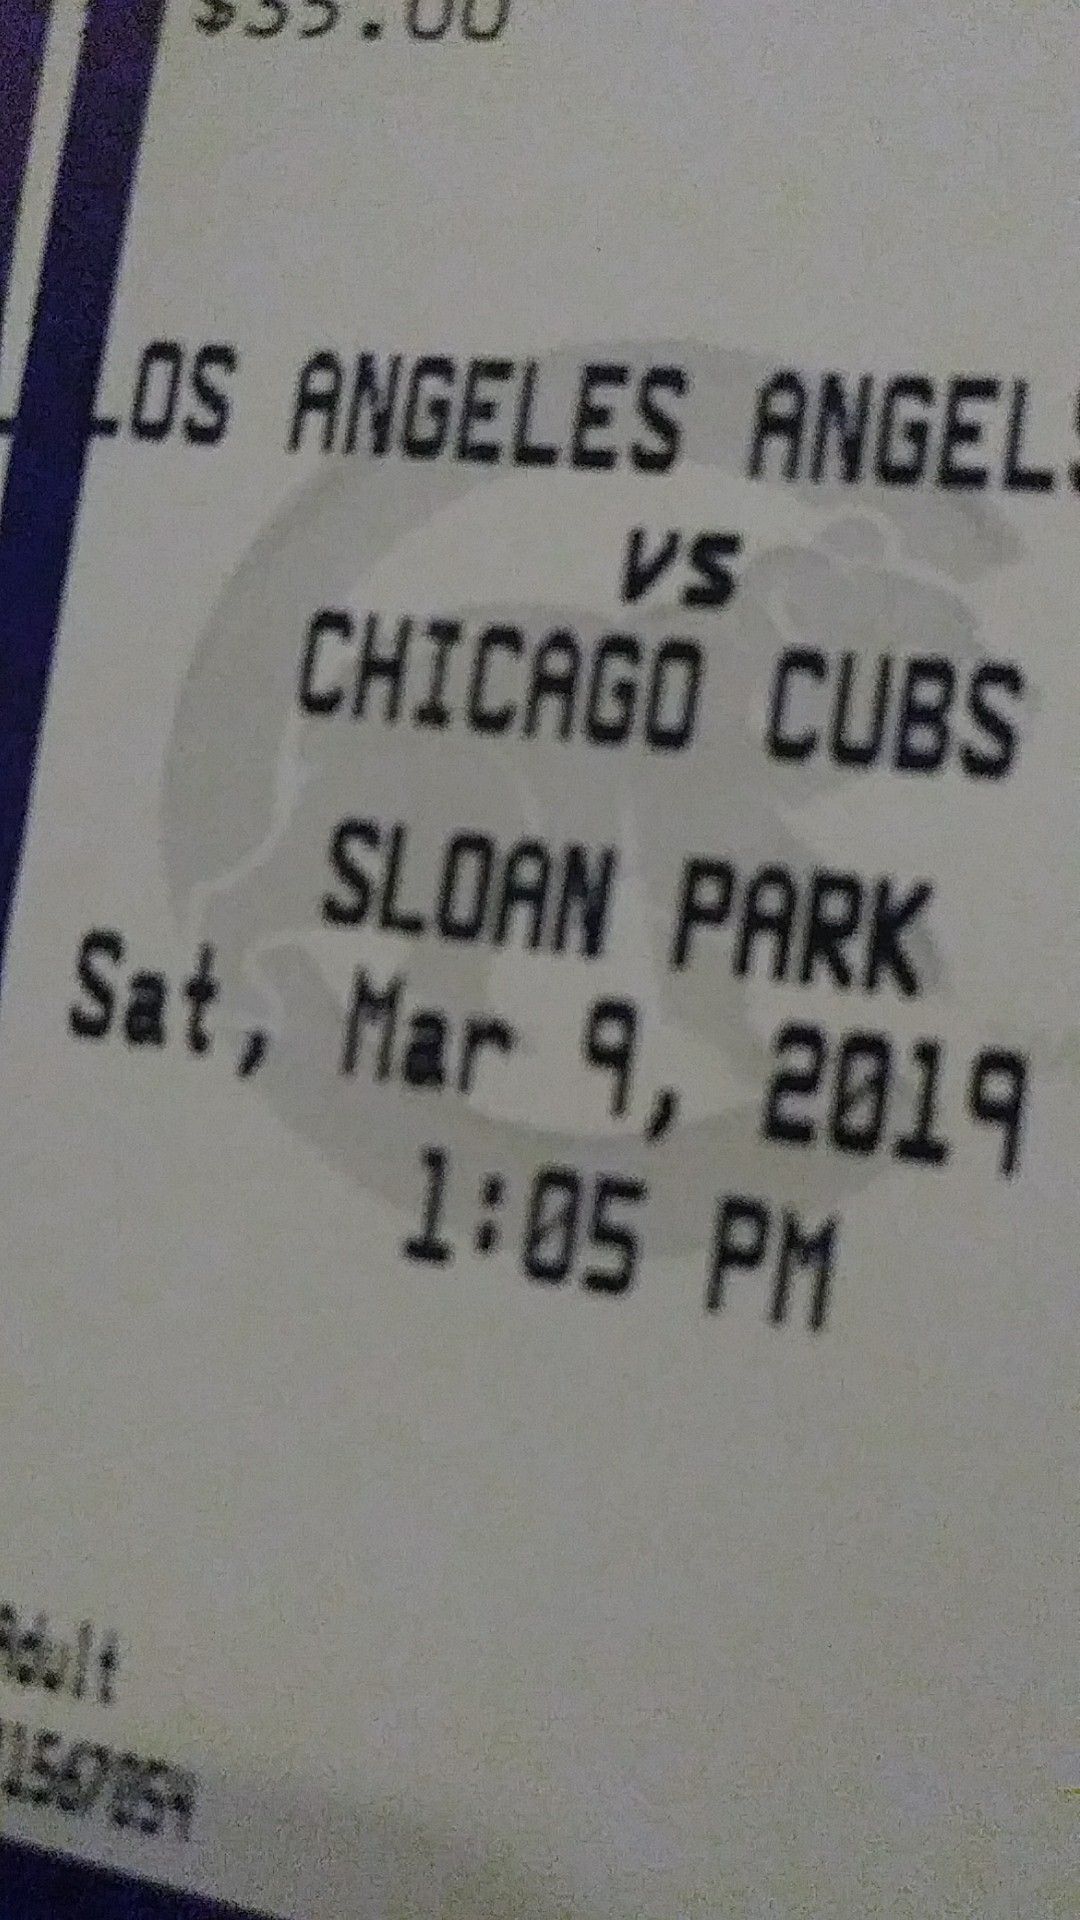 Cubs vs Angels $65 each lawn seats